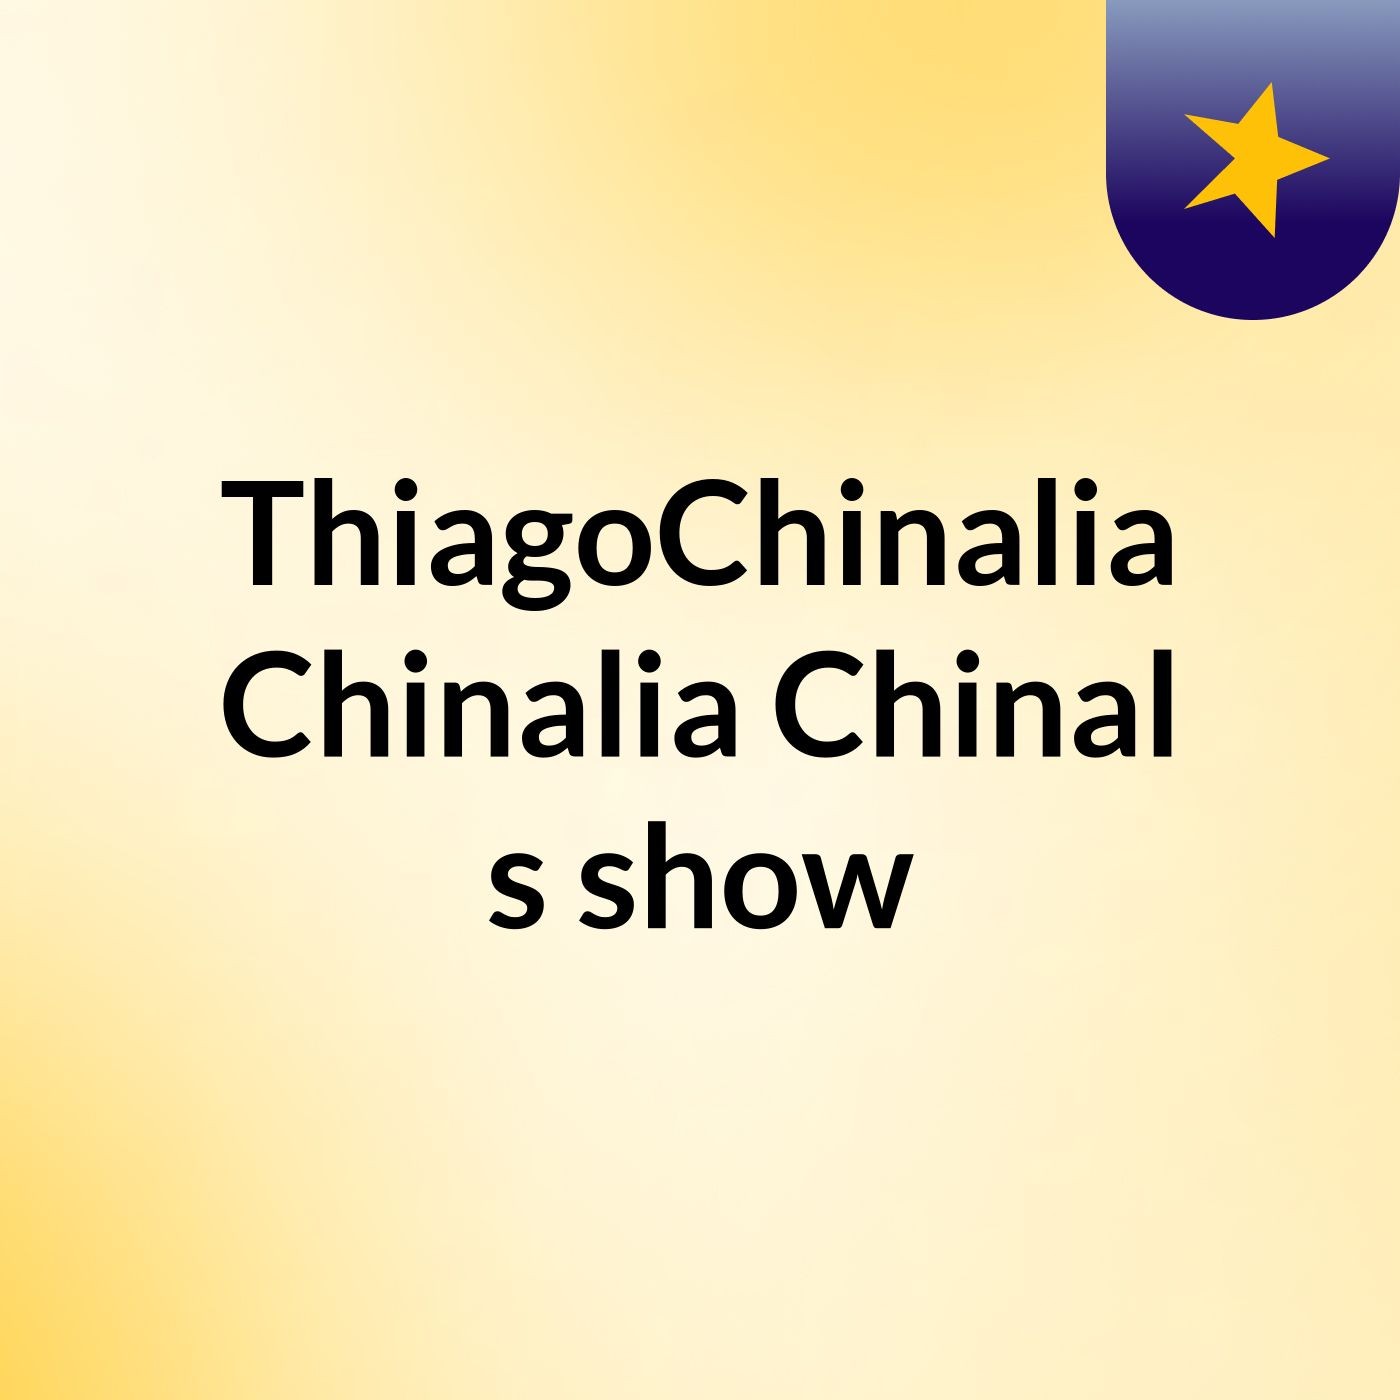 ThiagoChinalia Chinalia Chinal's show